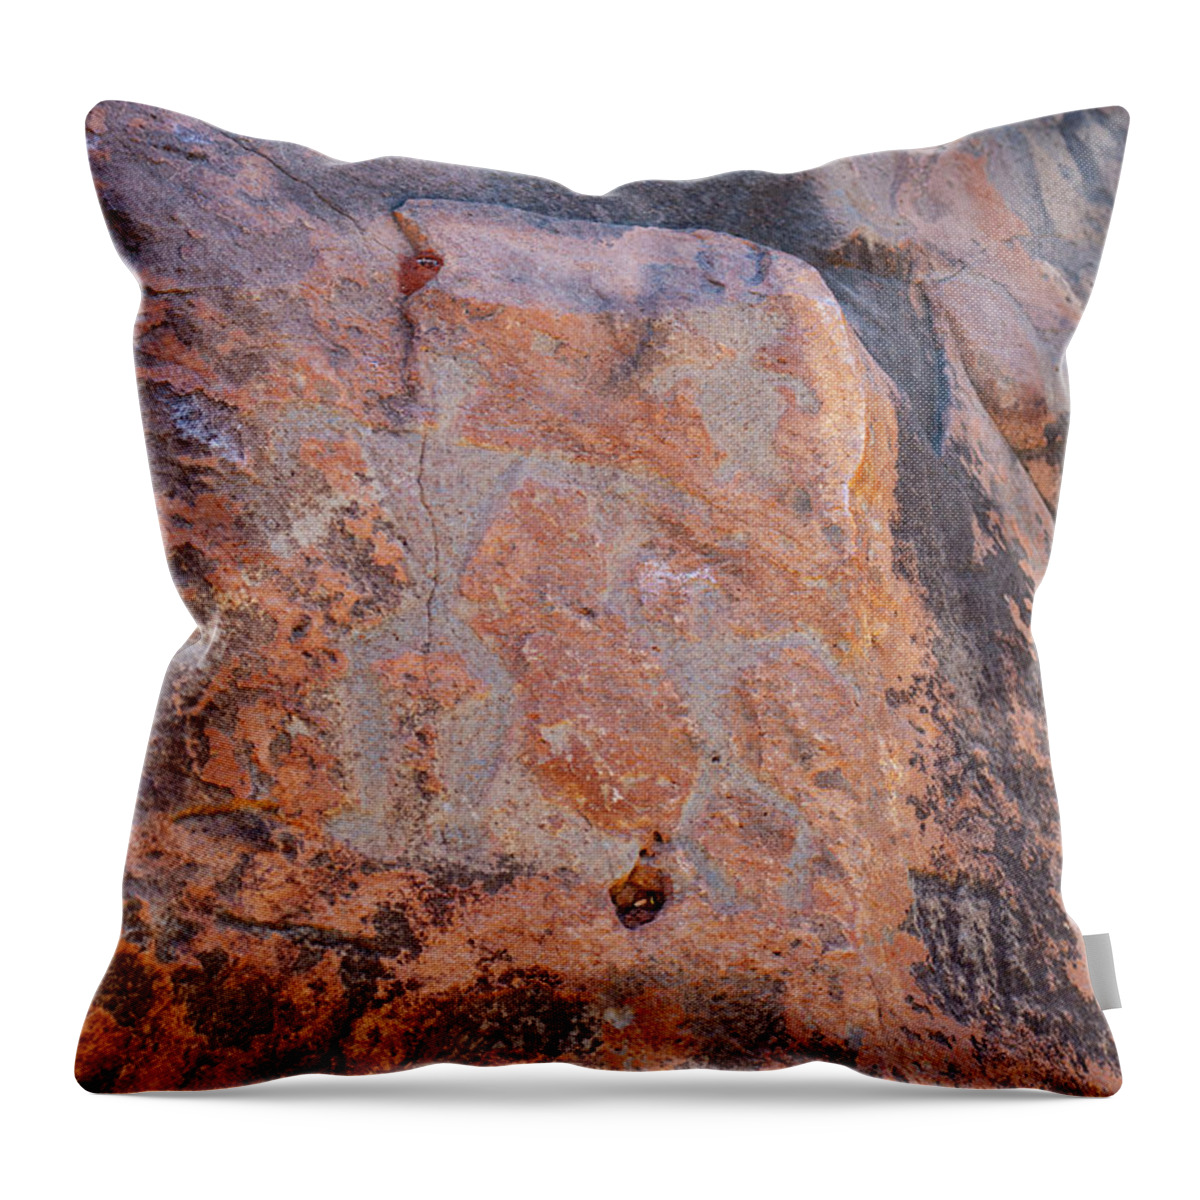 Petroglyphs Throw Pillow featuring the photograph Olowalu Petroglyphs by Anthony Jones